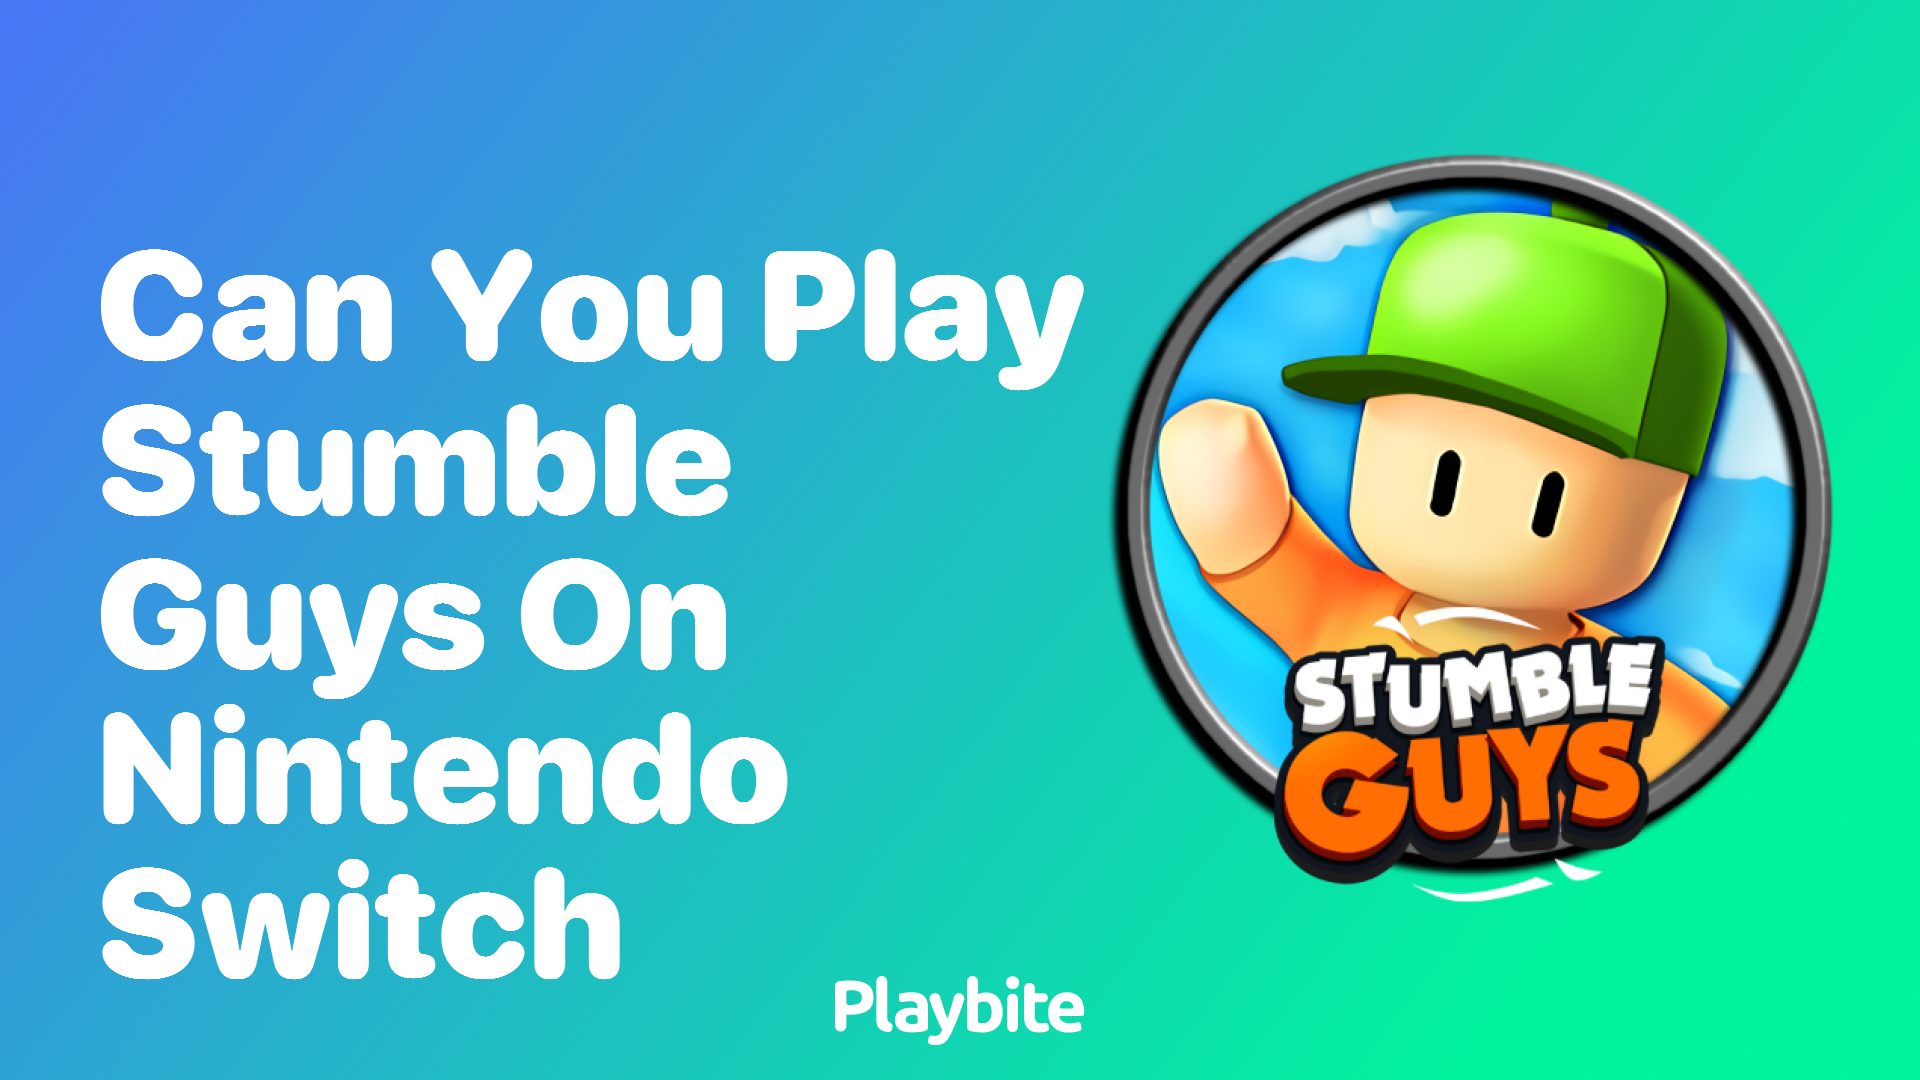 Stumble Guys premieres on Nintendo Switch - Softonic